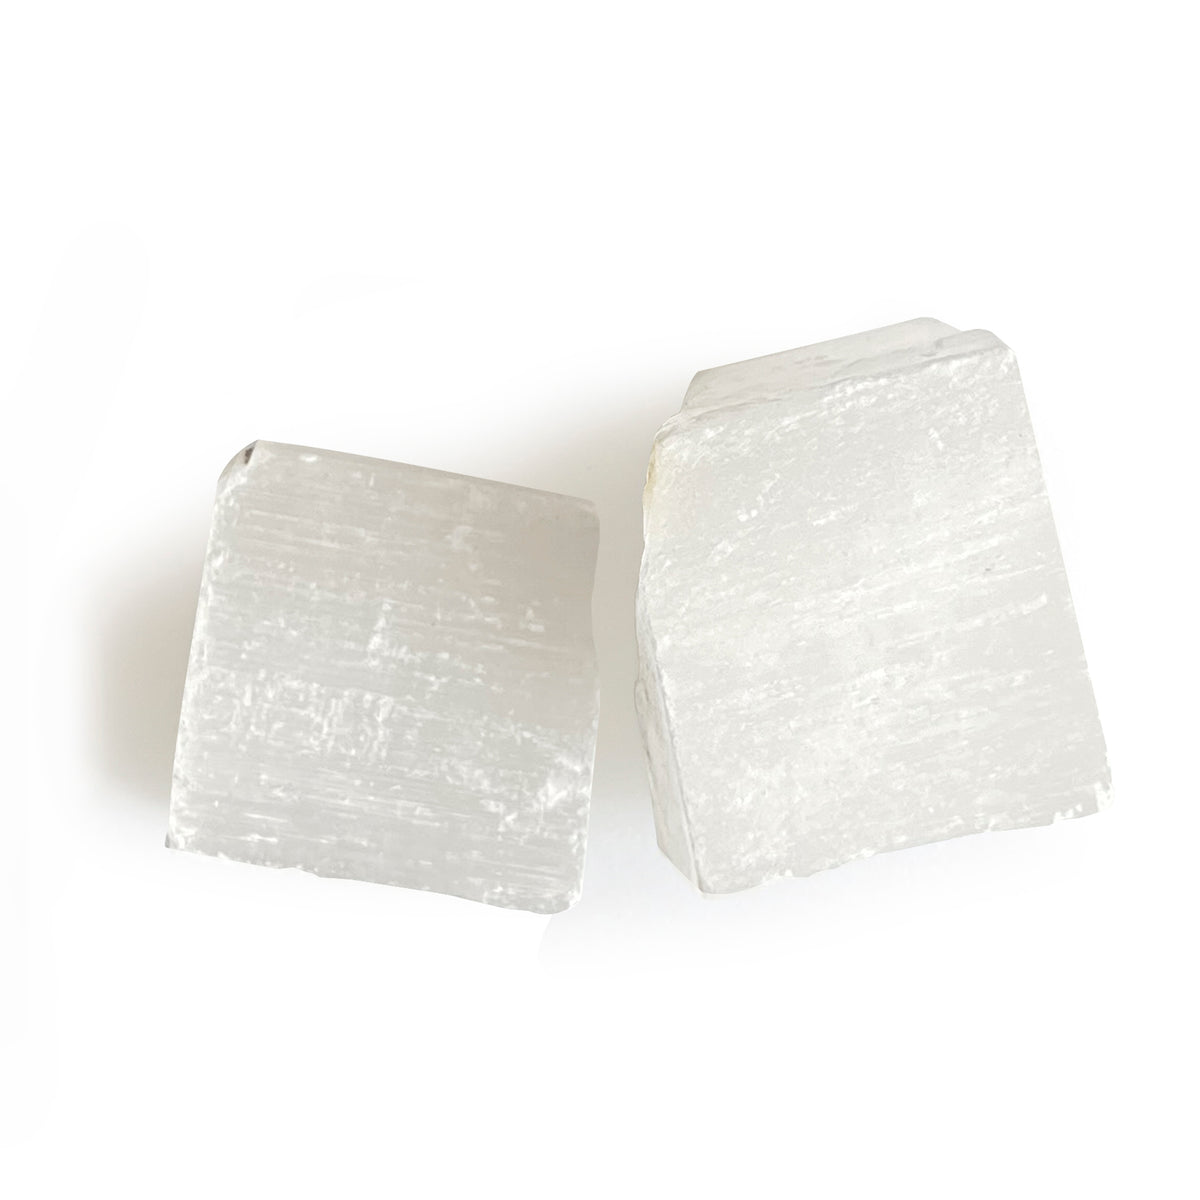 Natural Selenite Raw Crystal Stone Original Certified - 2 Piece